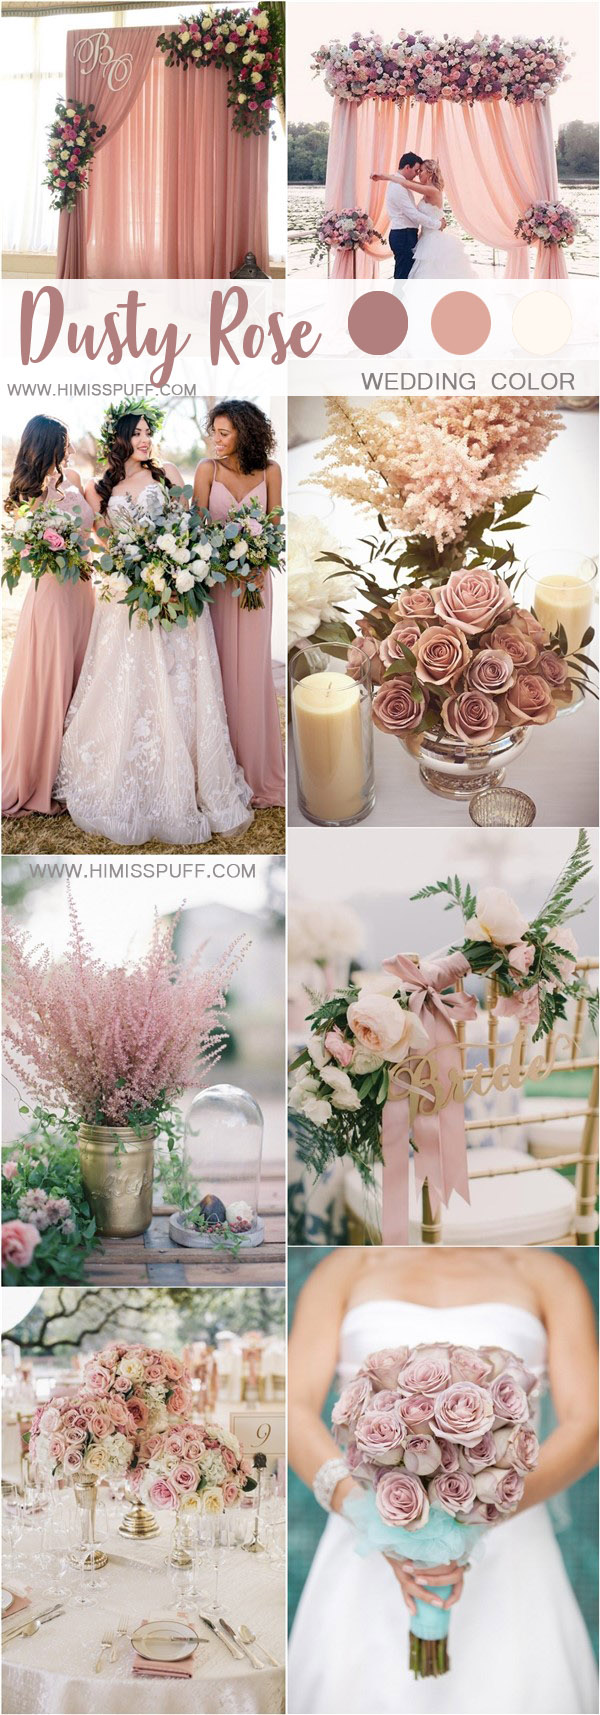 dusty rose wedding color ideas